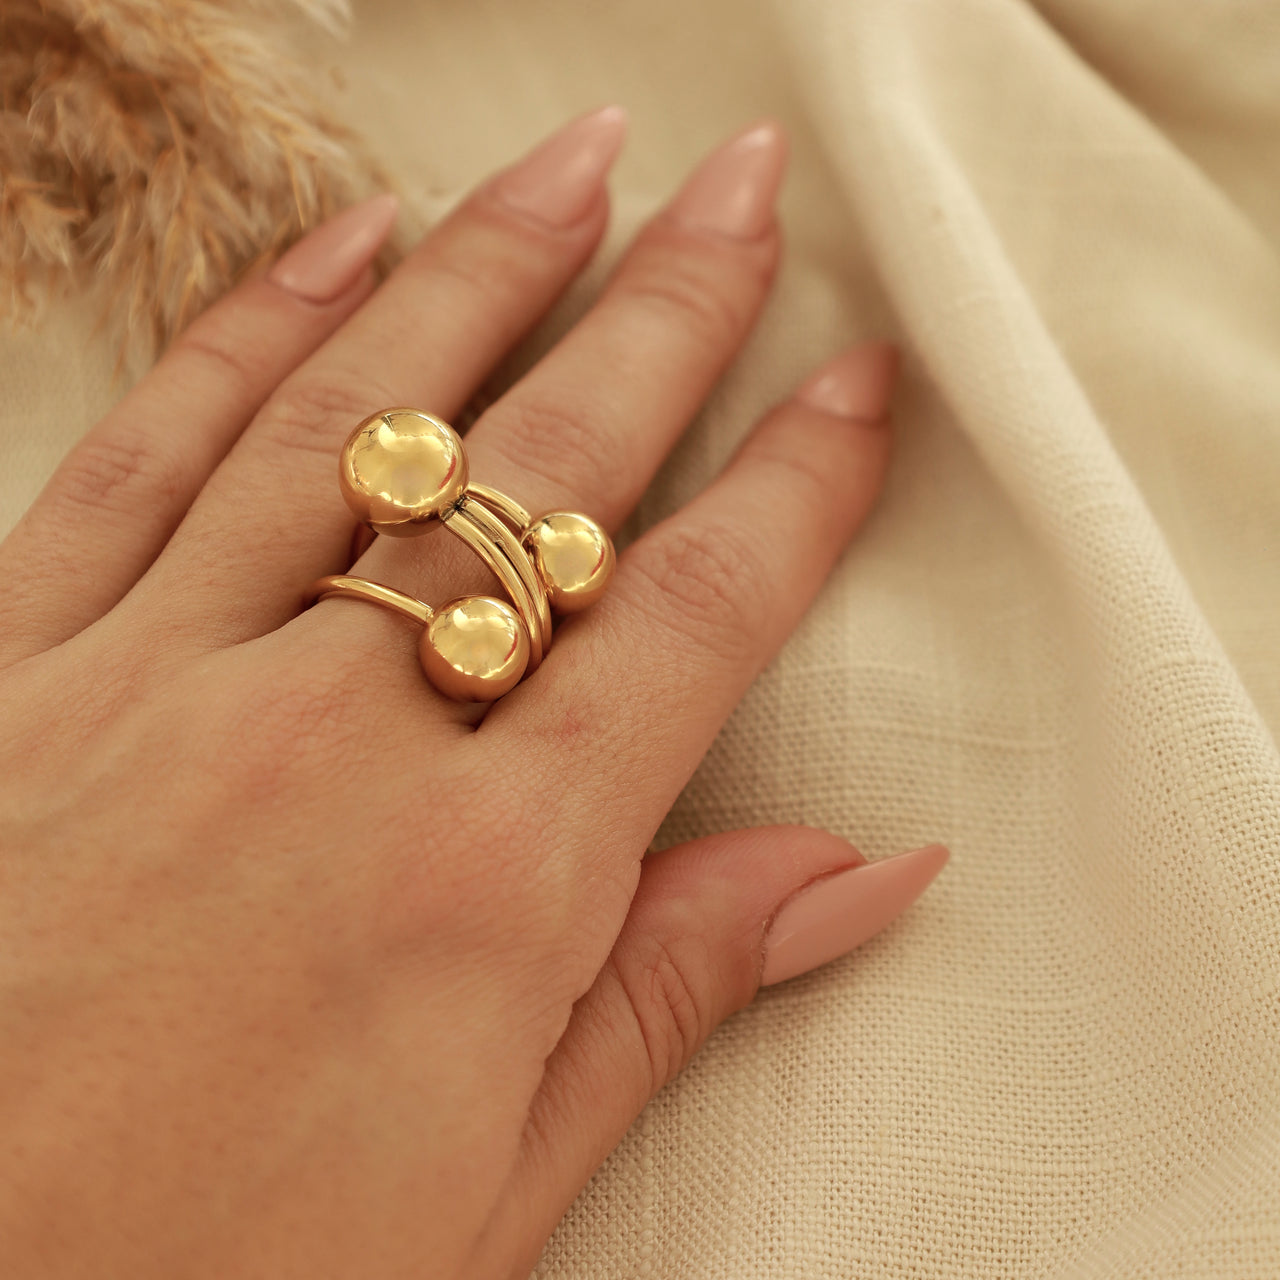 Ashley gold ring